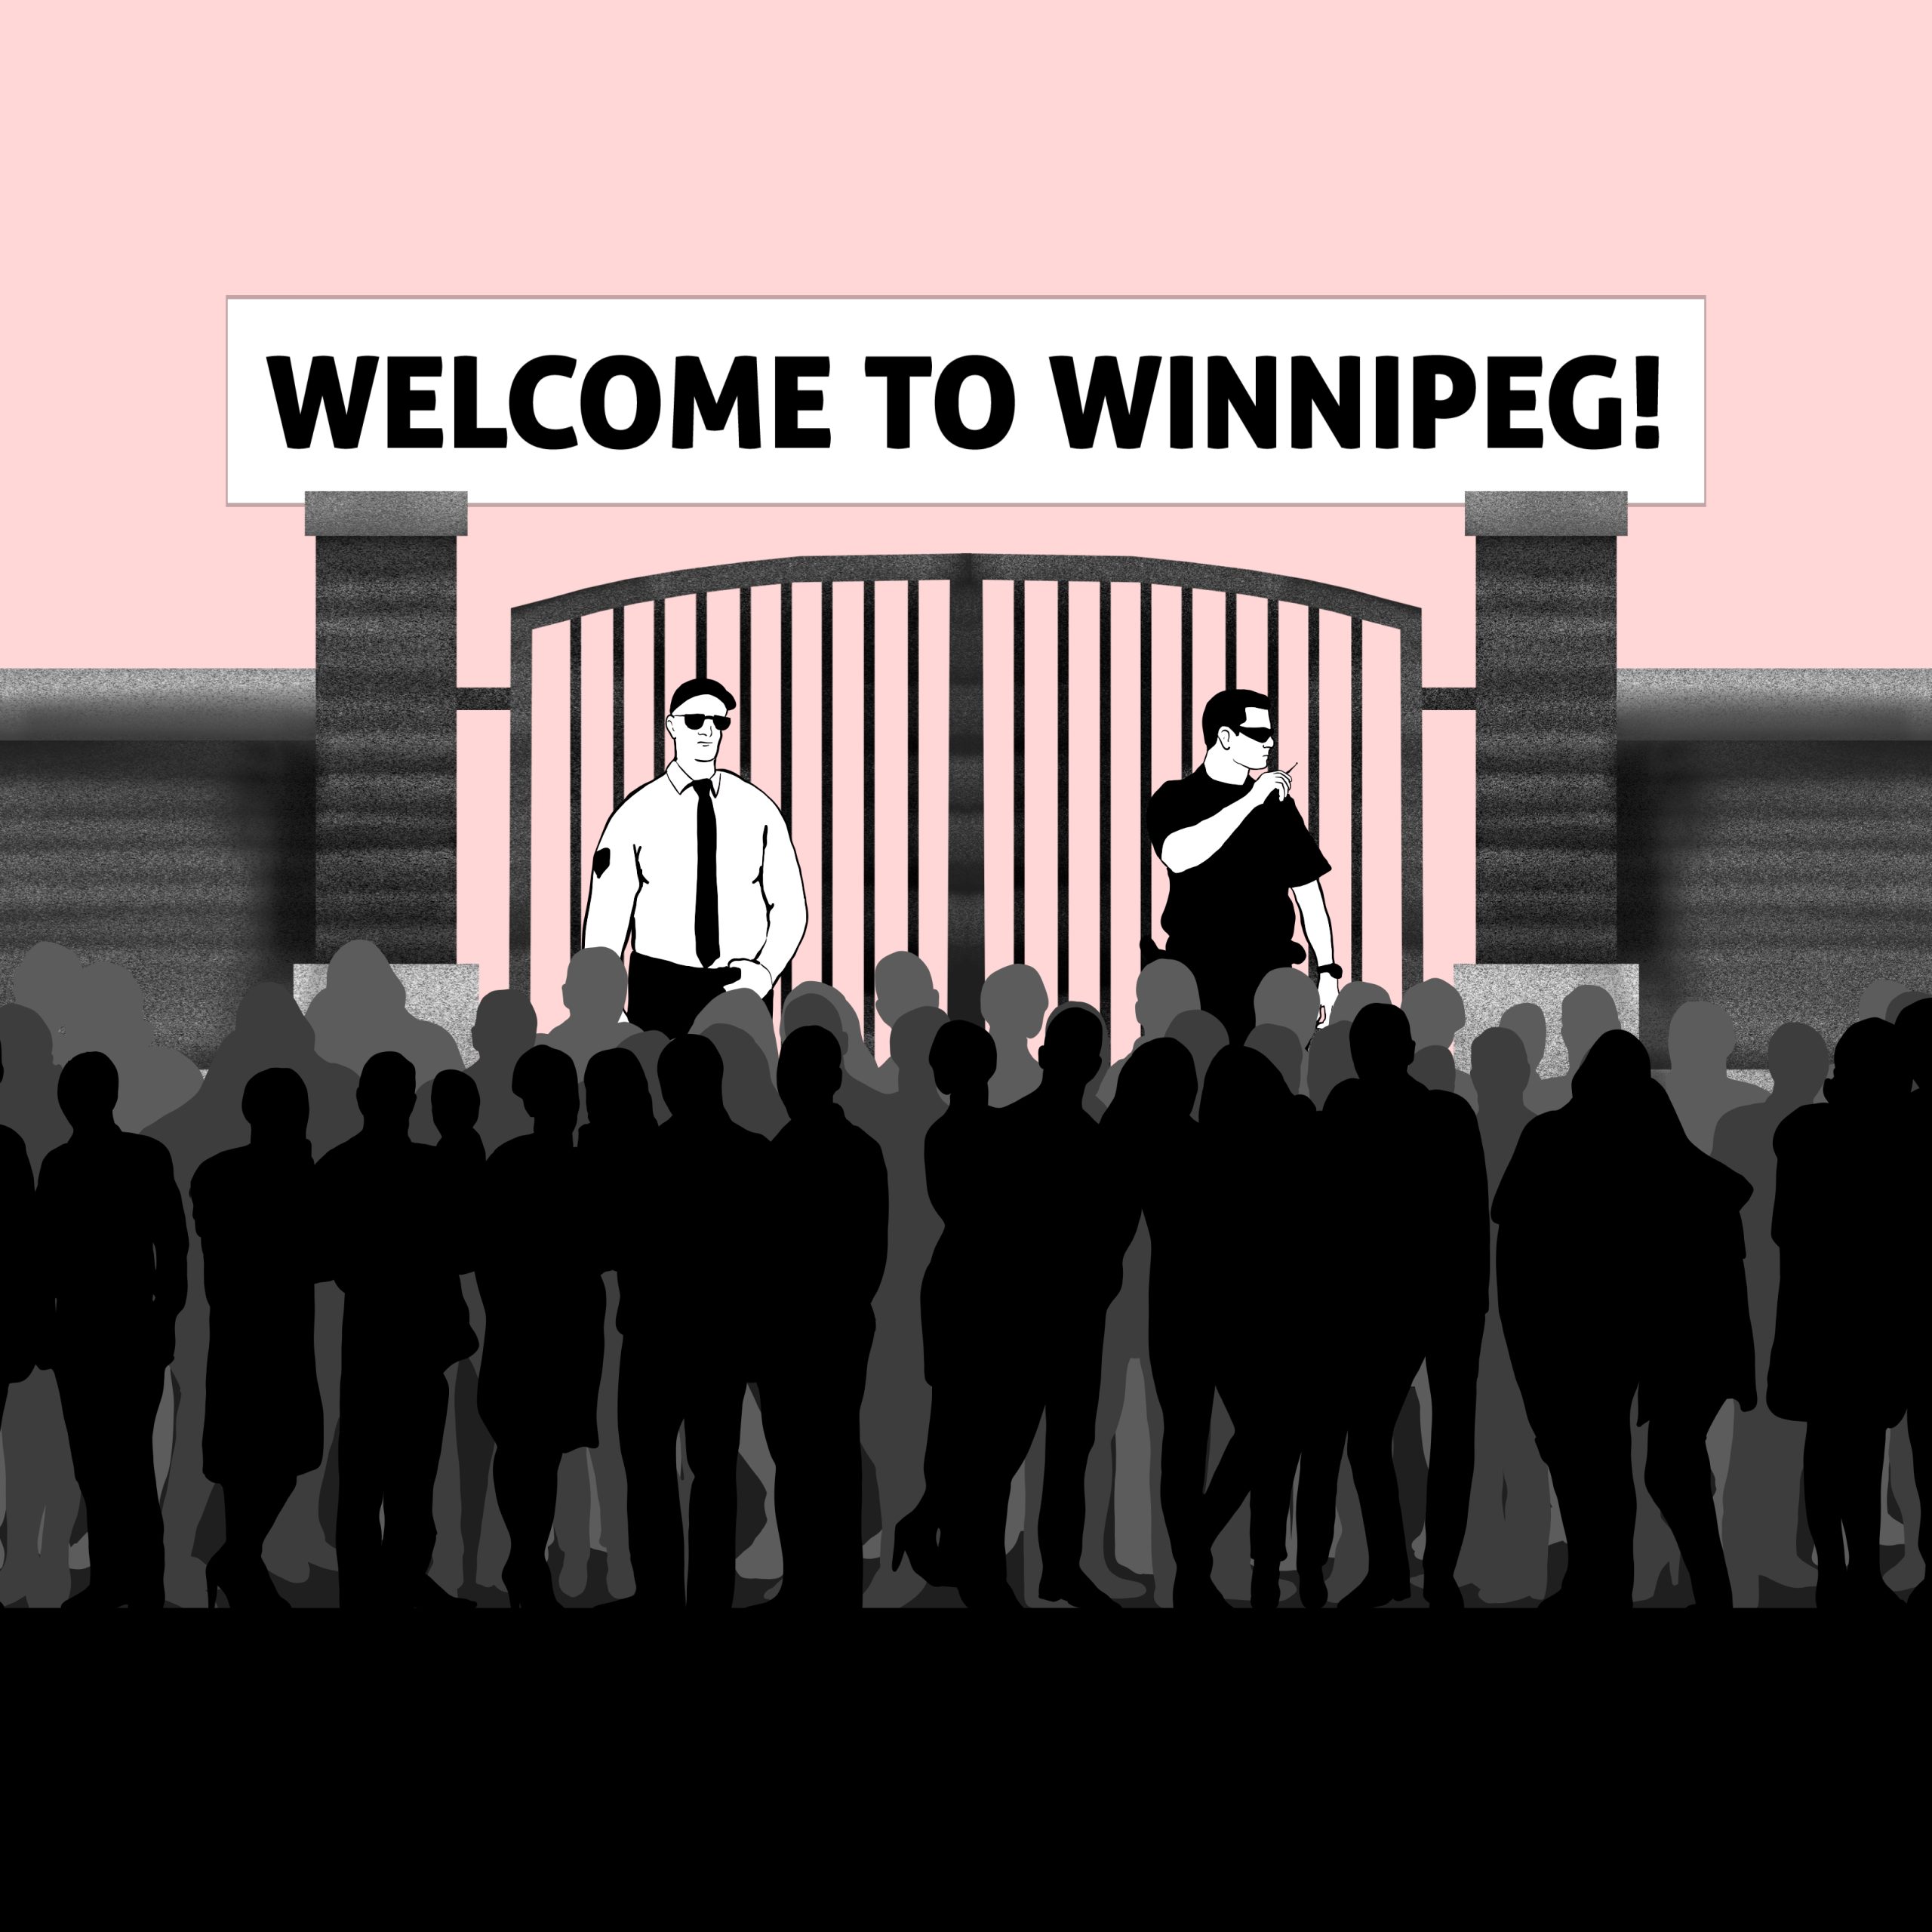 Welcoming Winnipeg gets it wrong again